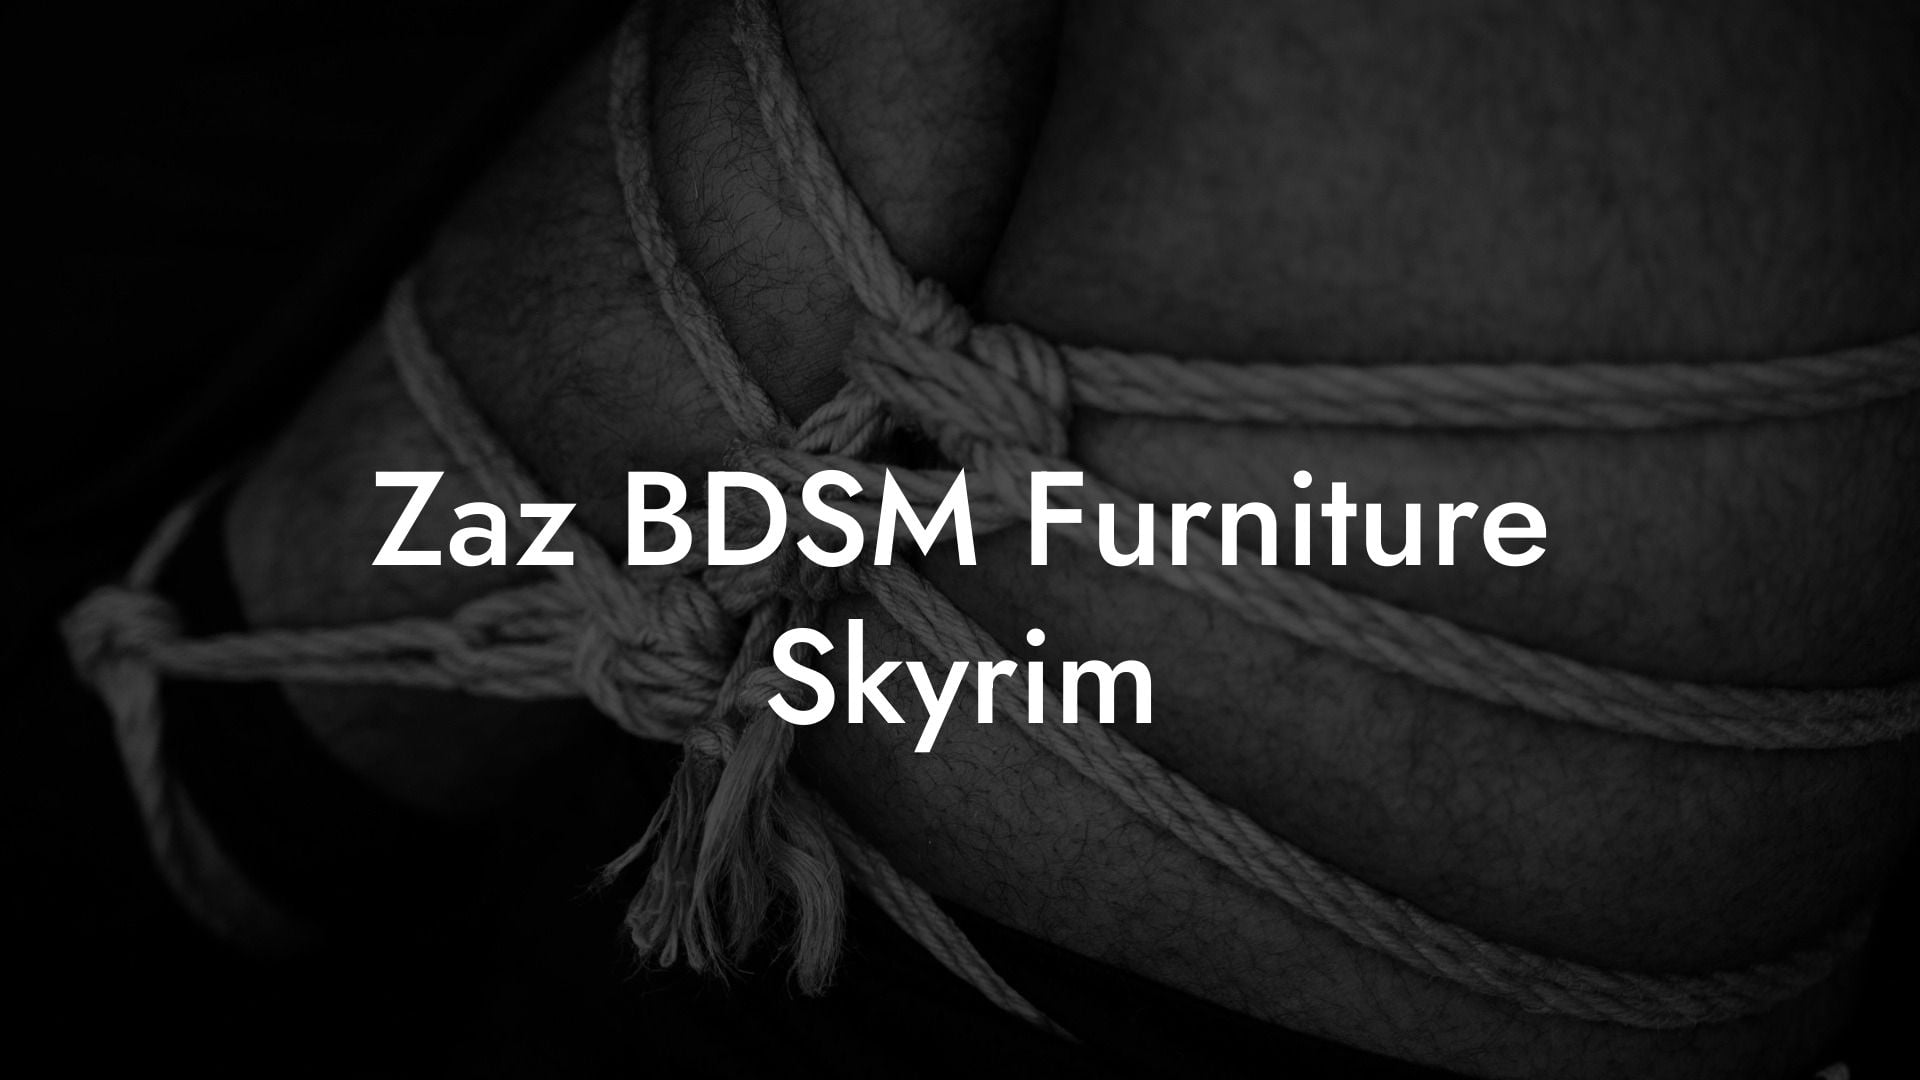 Zaz BDSM Furniture Skyrim